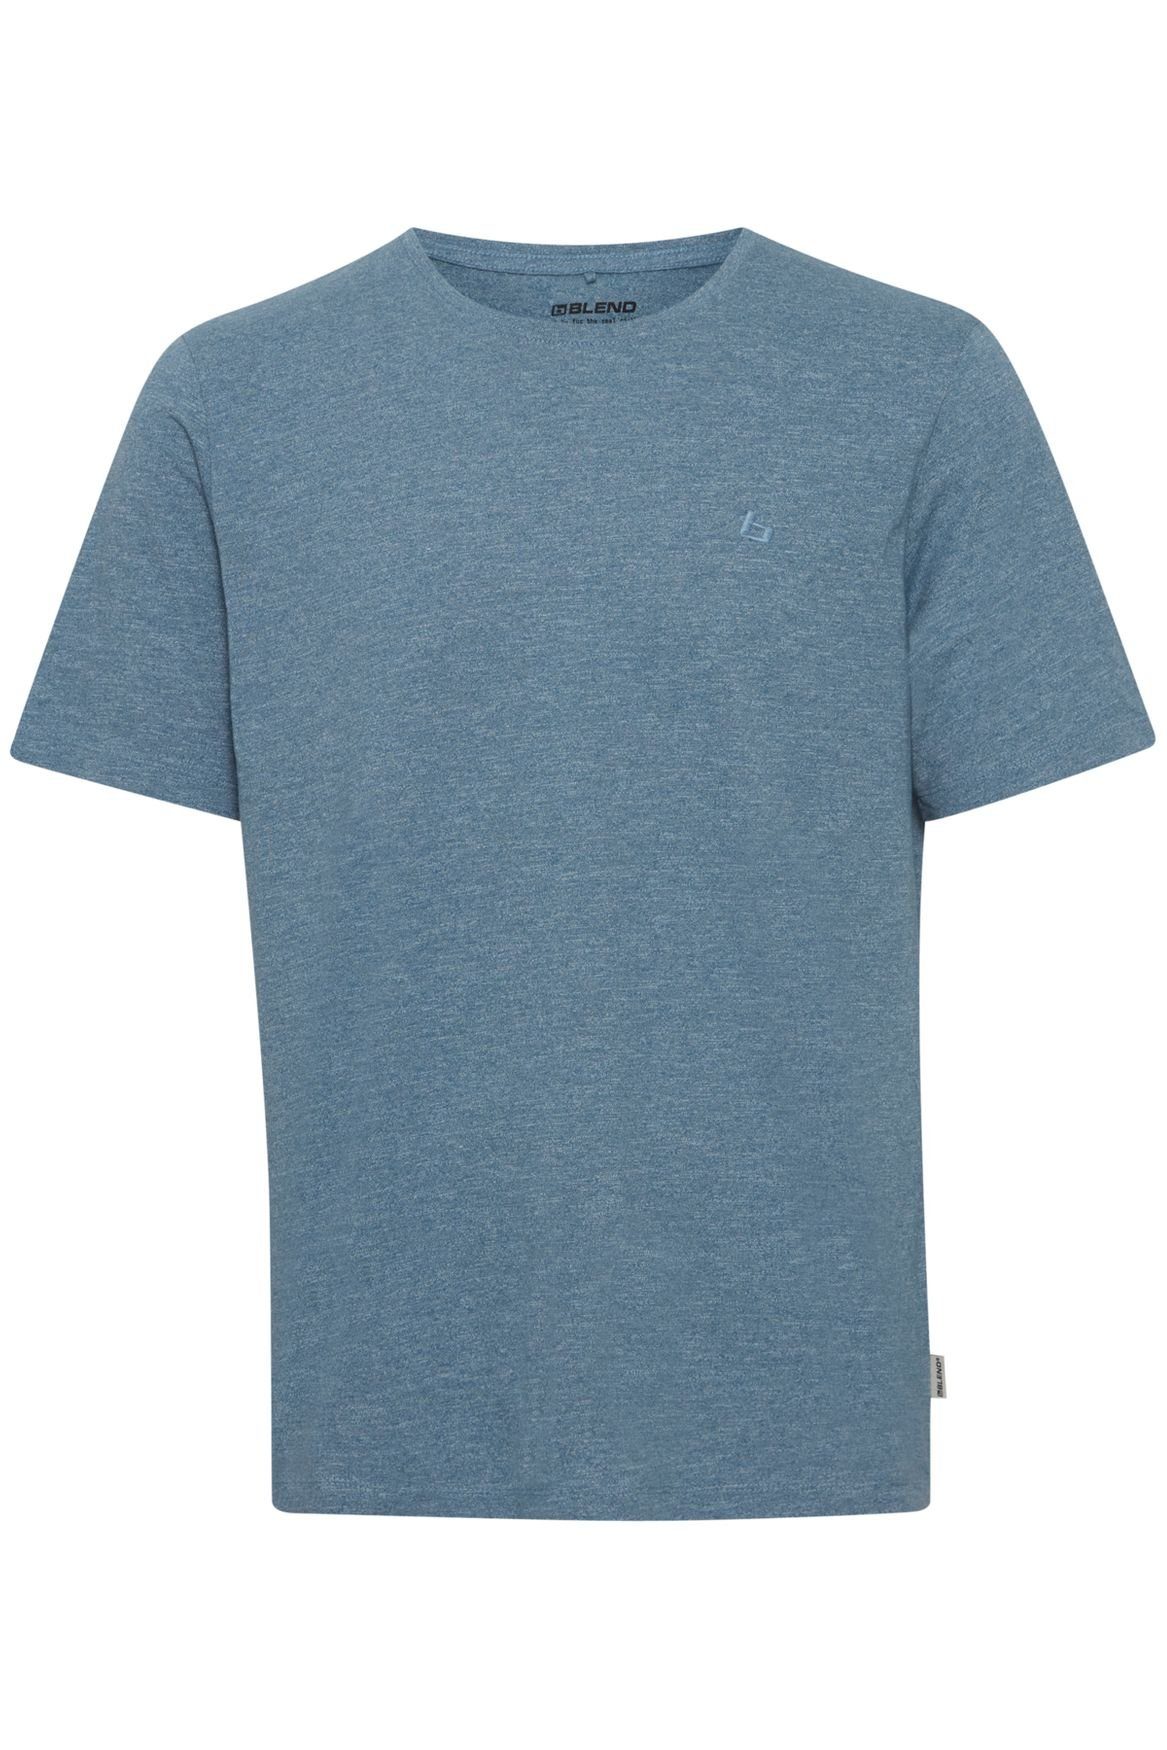 BHWilton 5030 in Shirt Kurzarm Blau Blend T-Shirt T-Shirt Rundhals Stretch